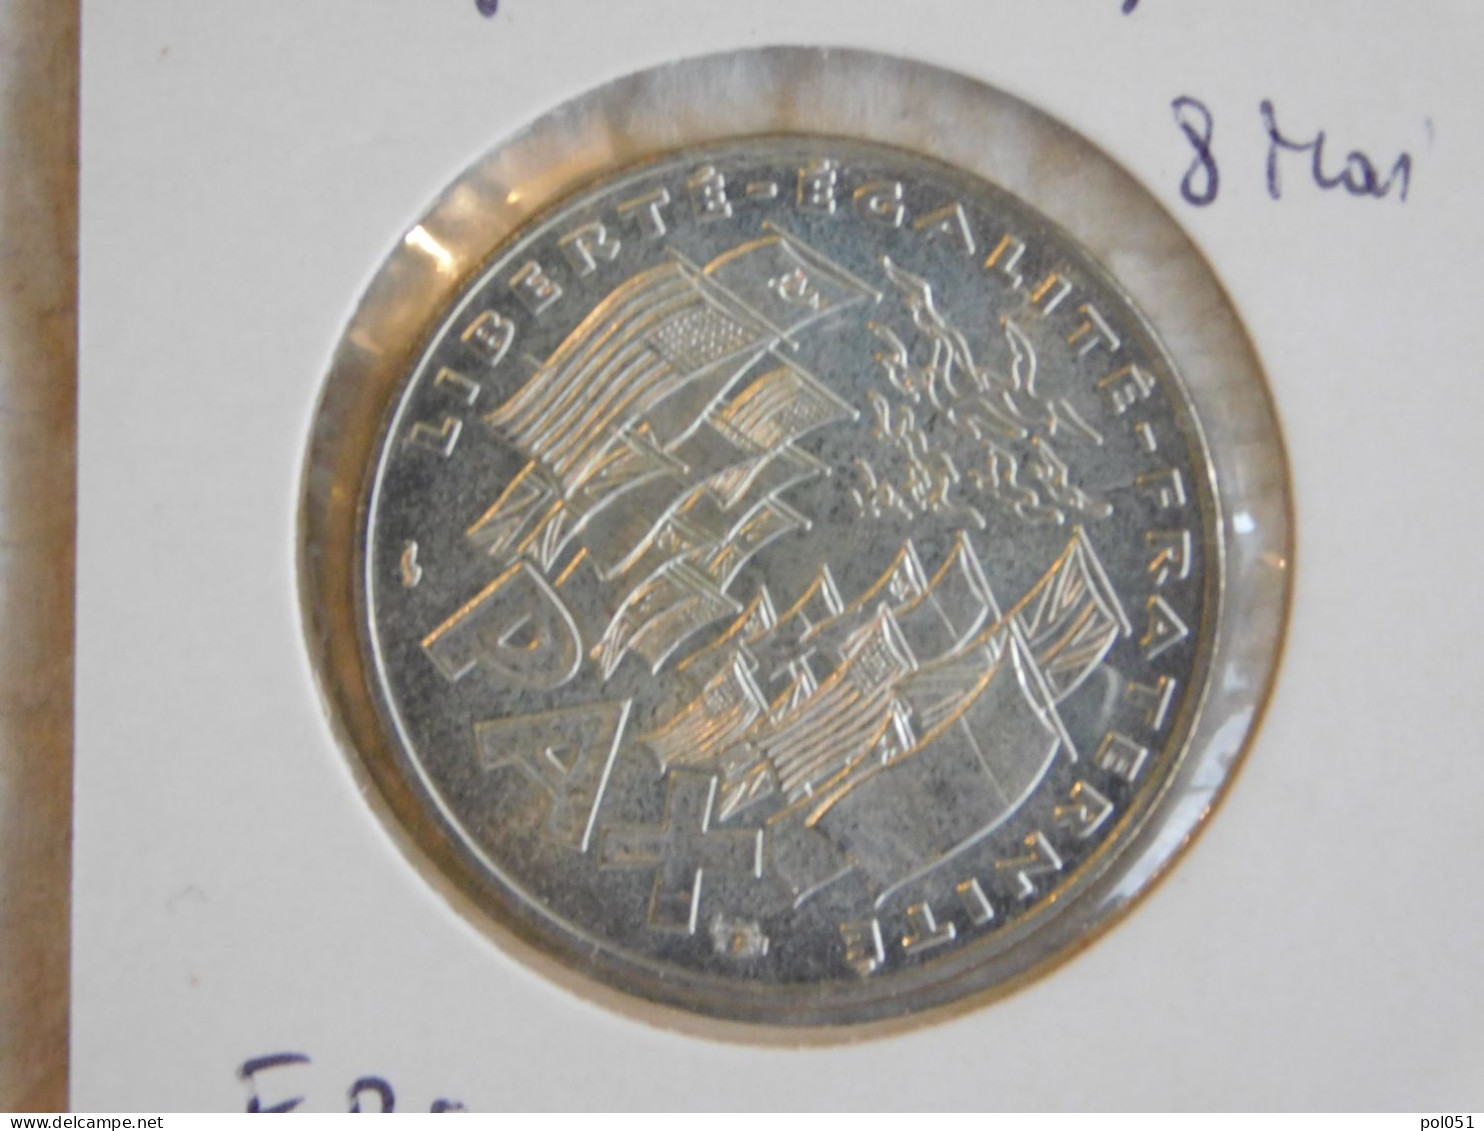 France 100 Francs 1995 FDC 8 MAI 1945 (1106) Argent Silver - 100 Francs